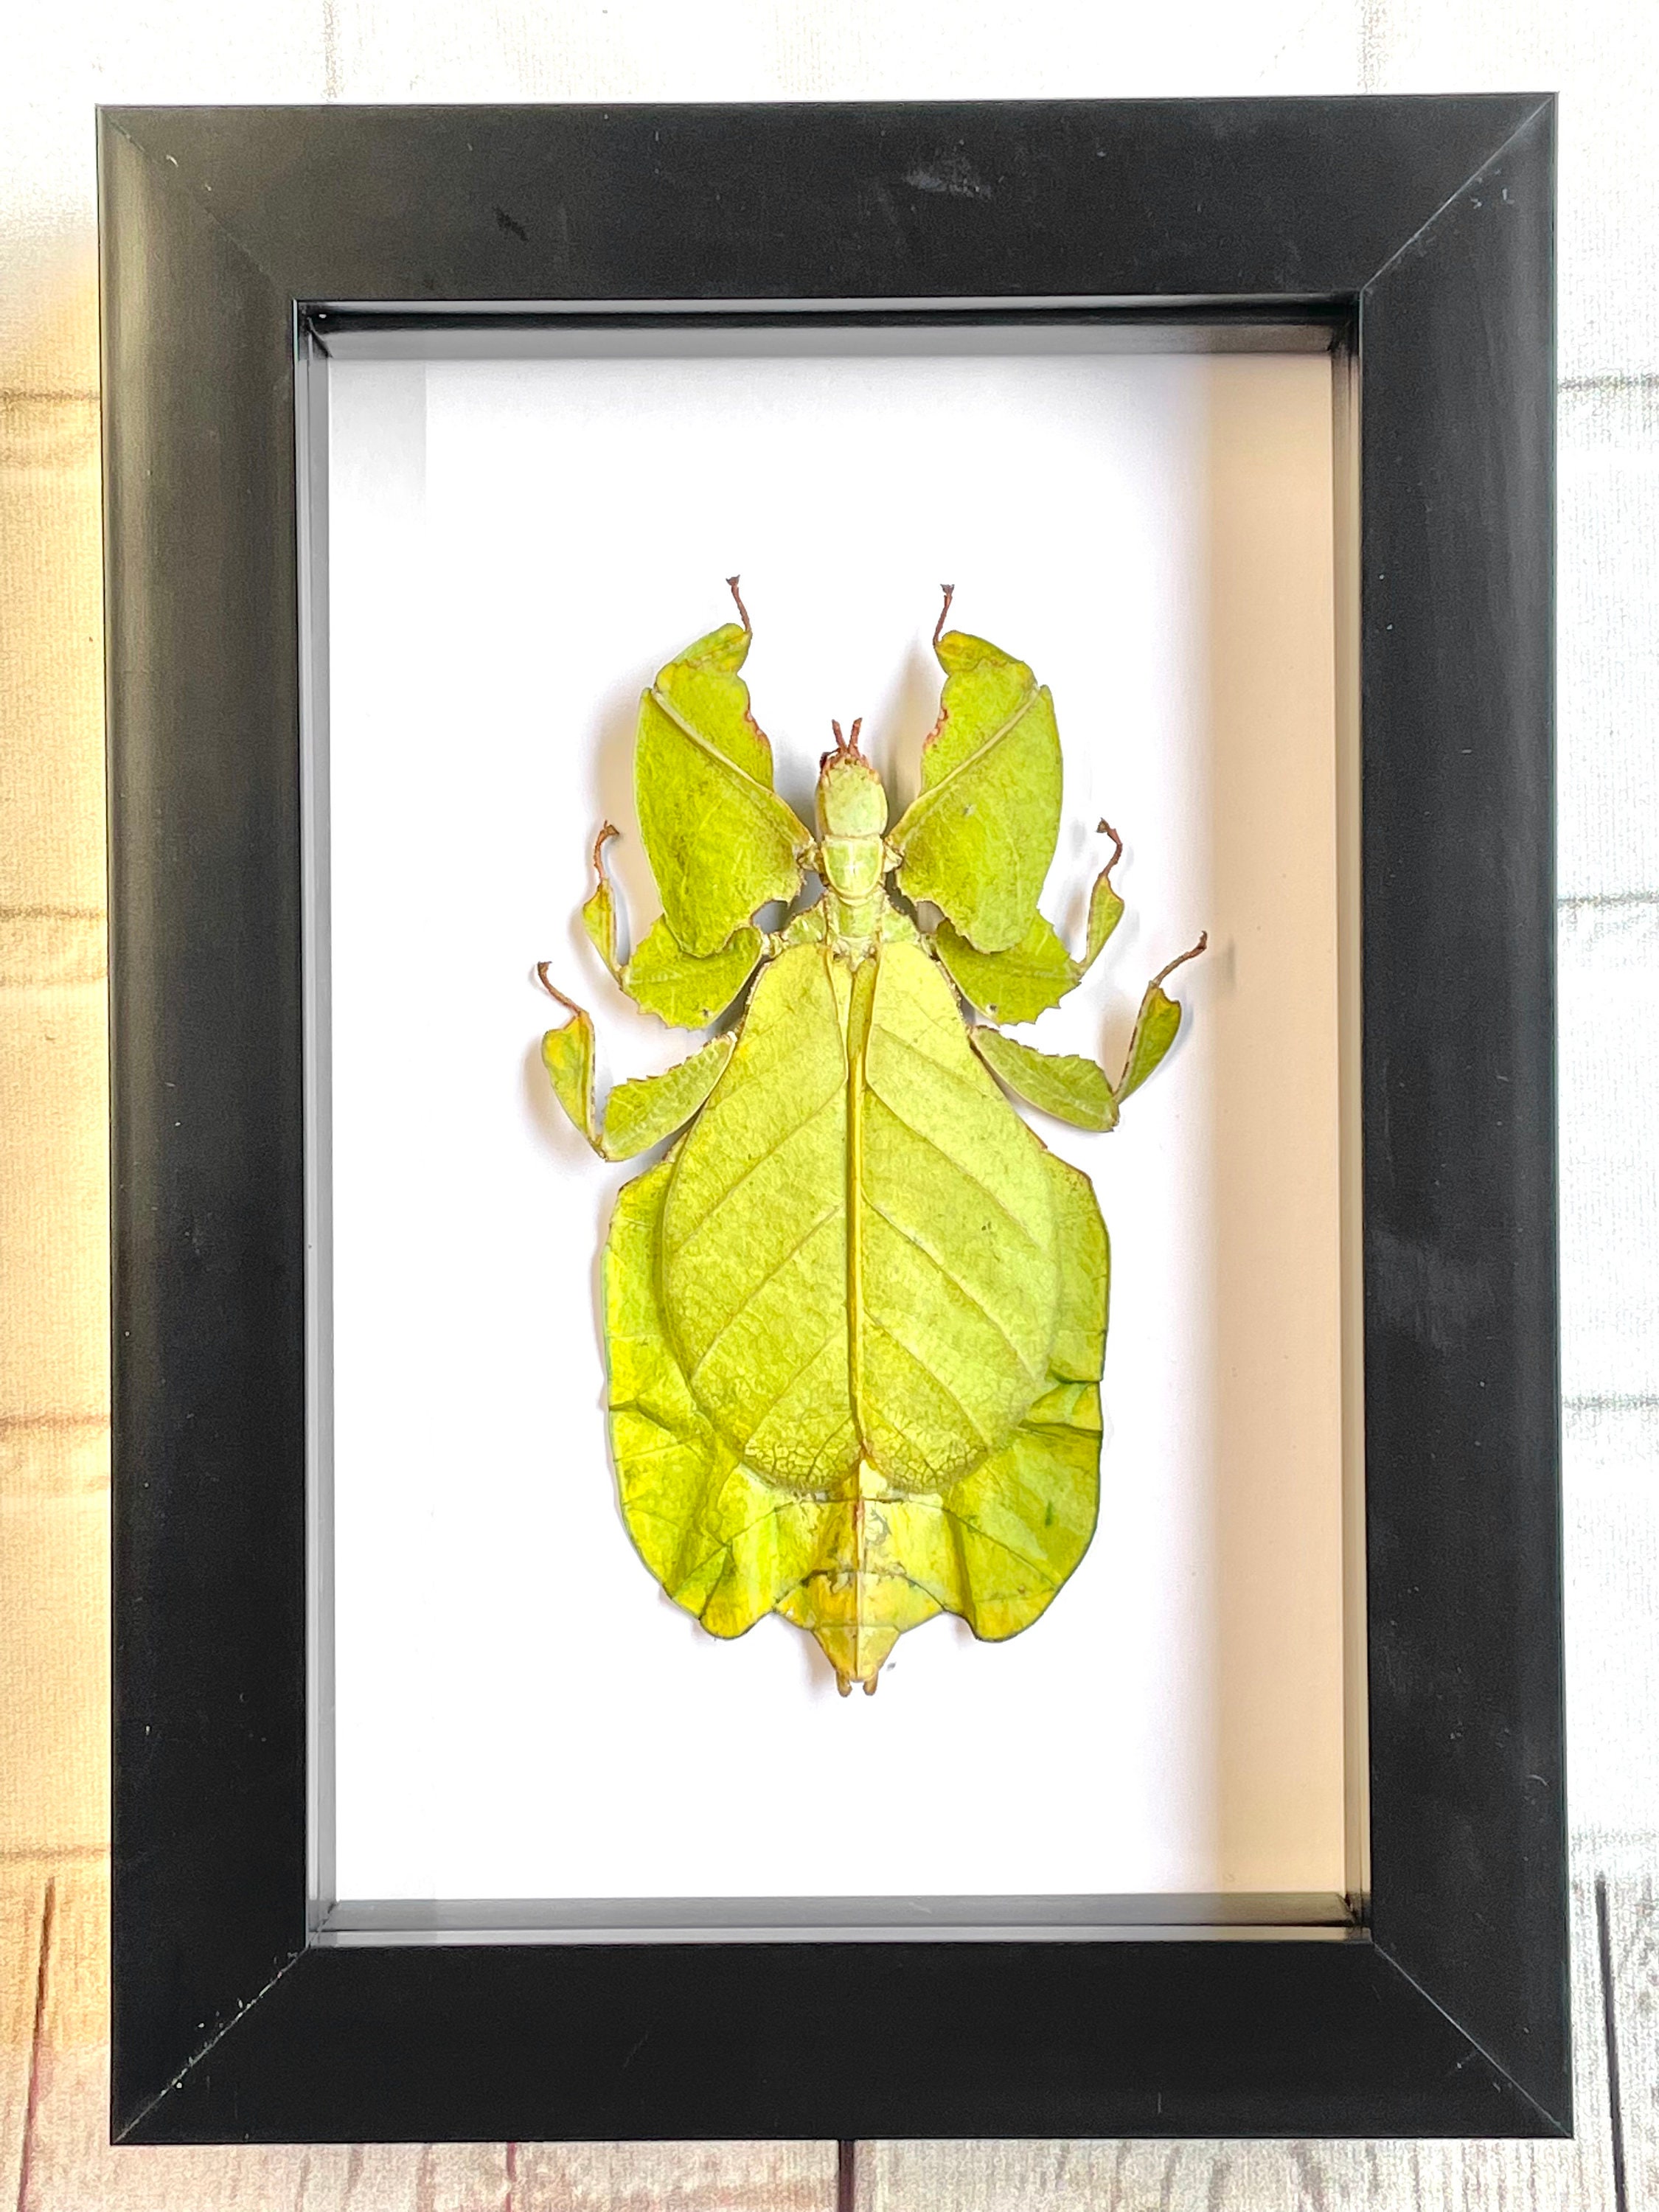 Deep Shadow Box Frame Display Insect Bug The Java Walking Leaf Pulchriphyllium pulchrifolium